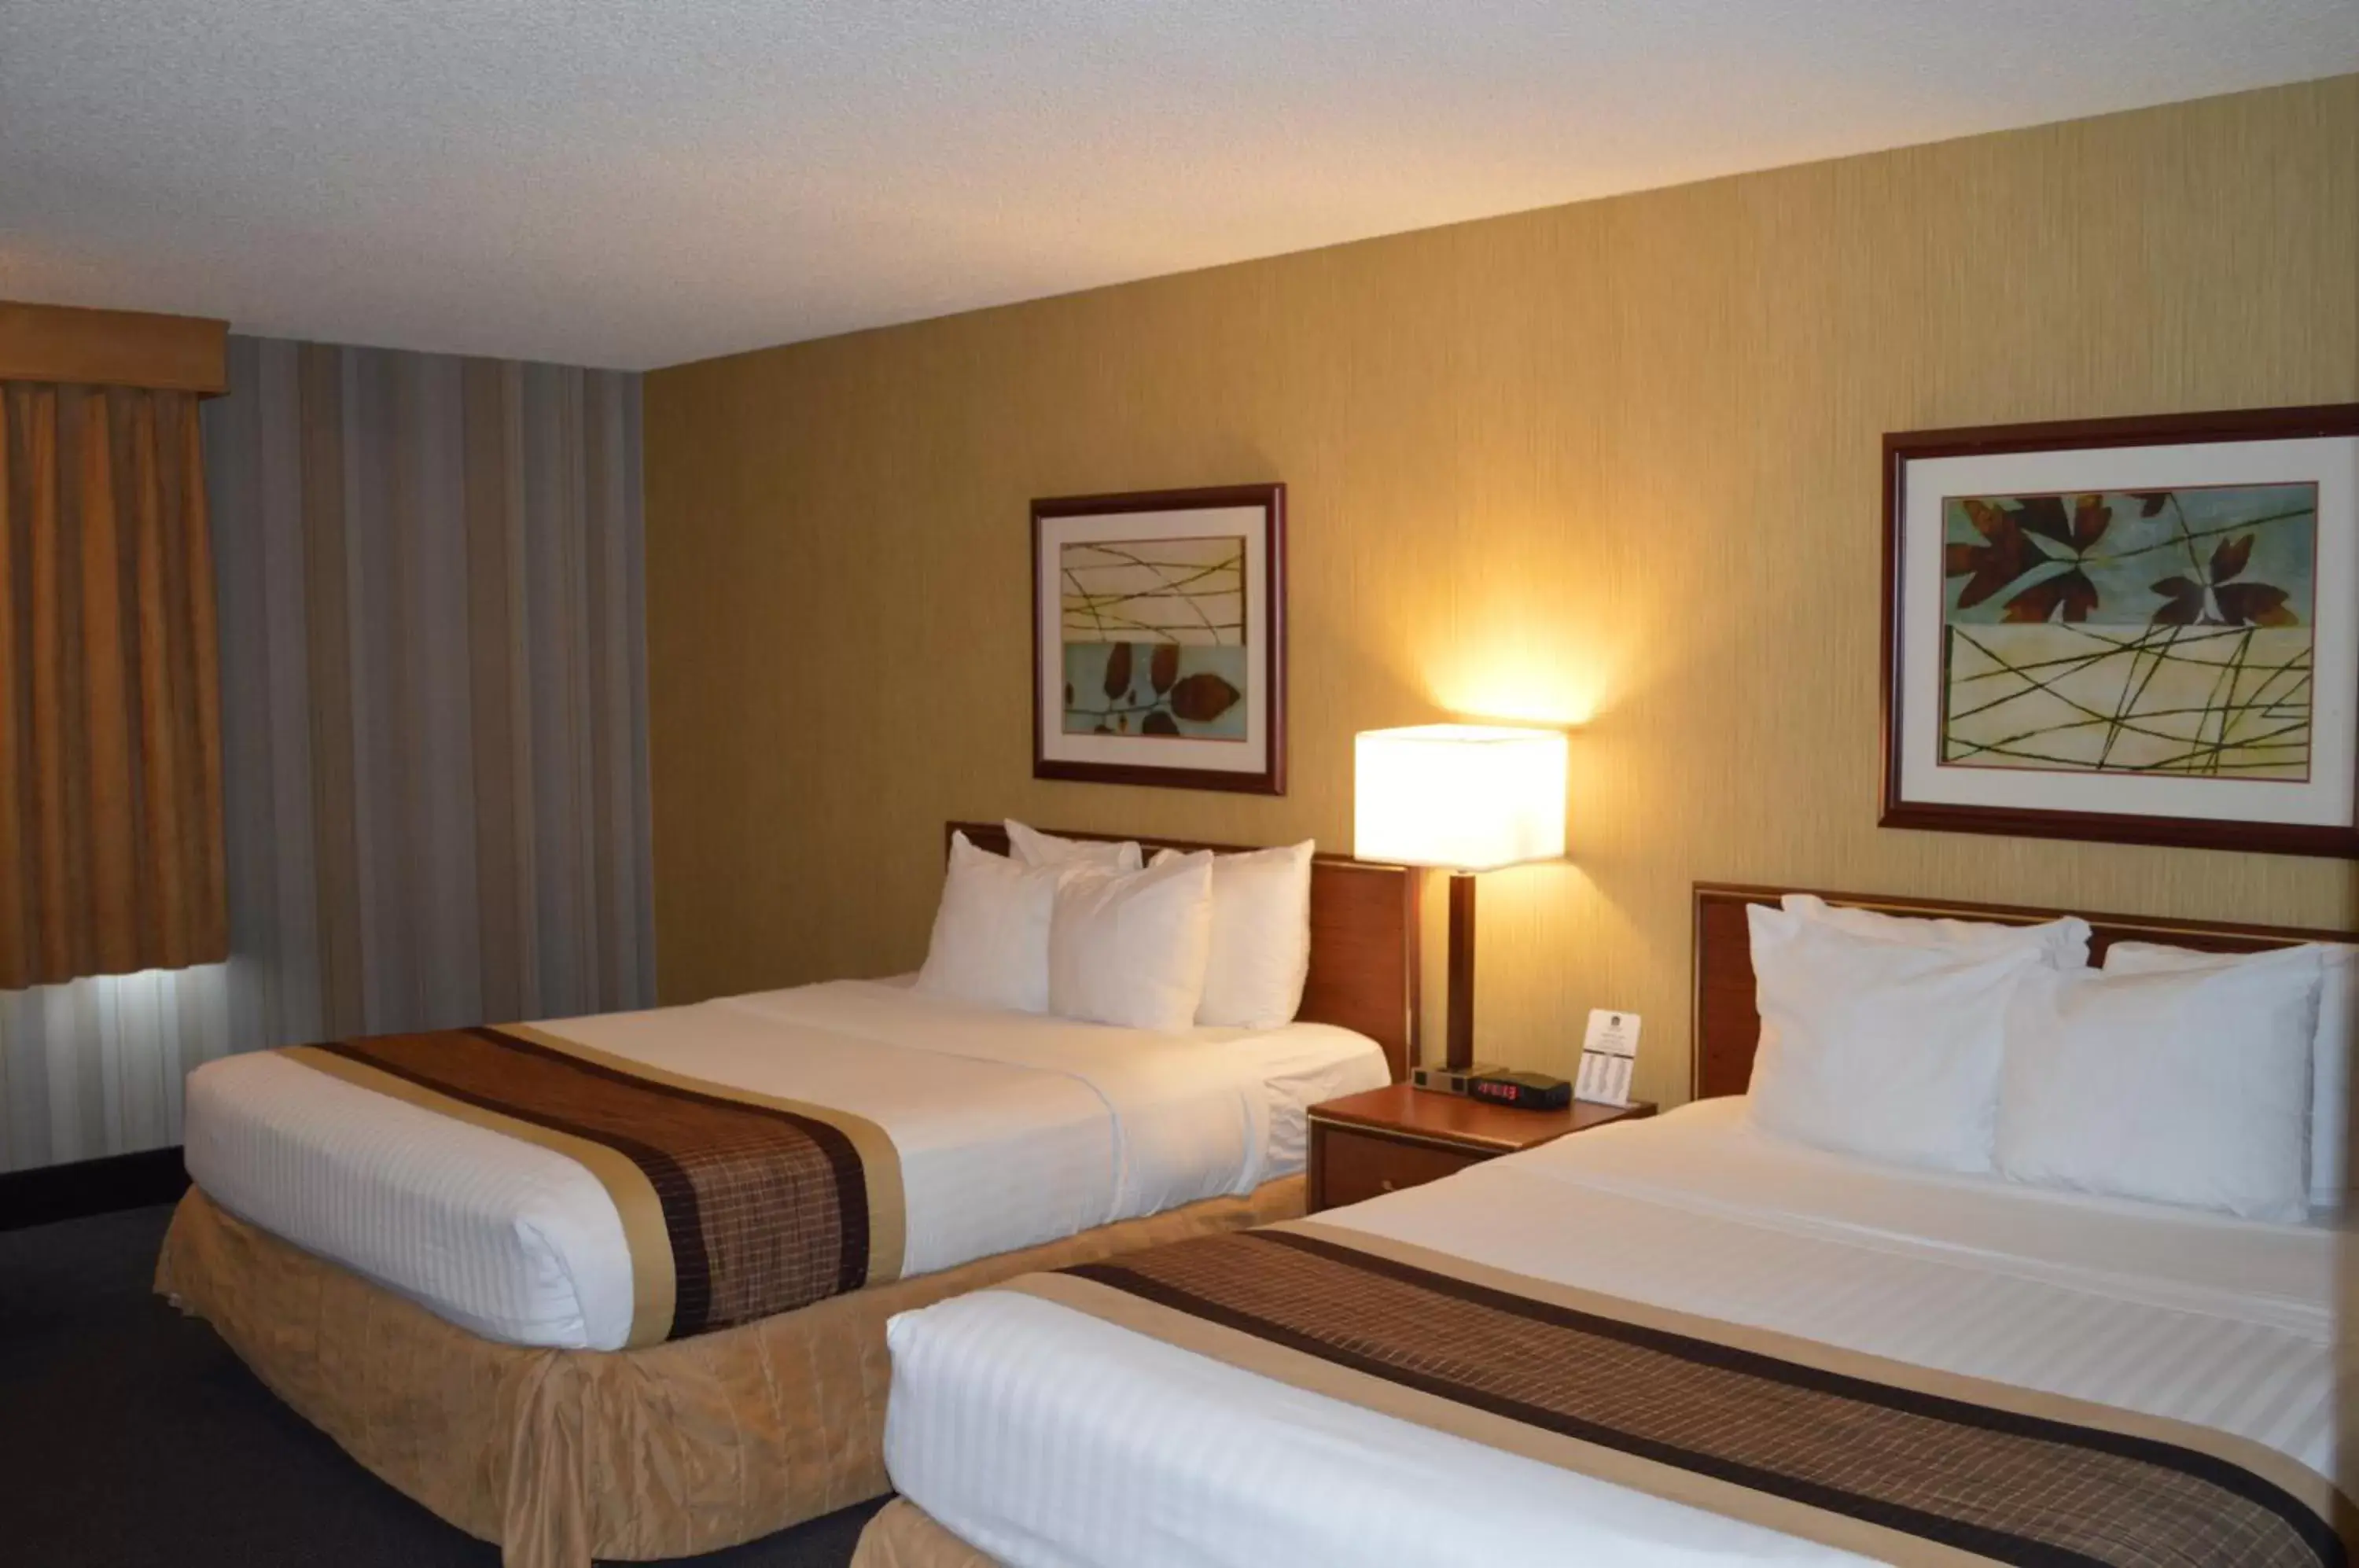 Bed, Room Photo in Best Western Cascadia Inn